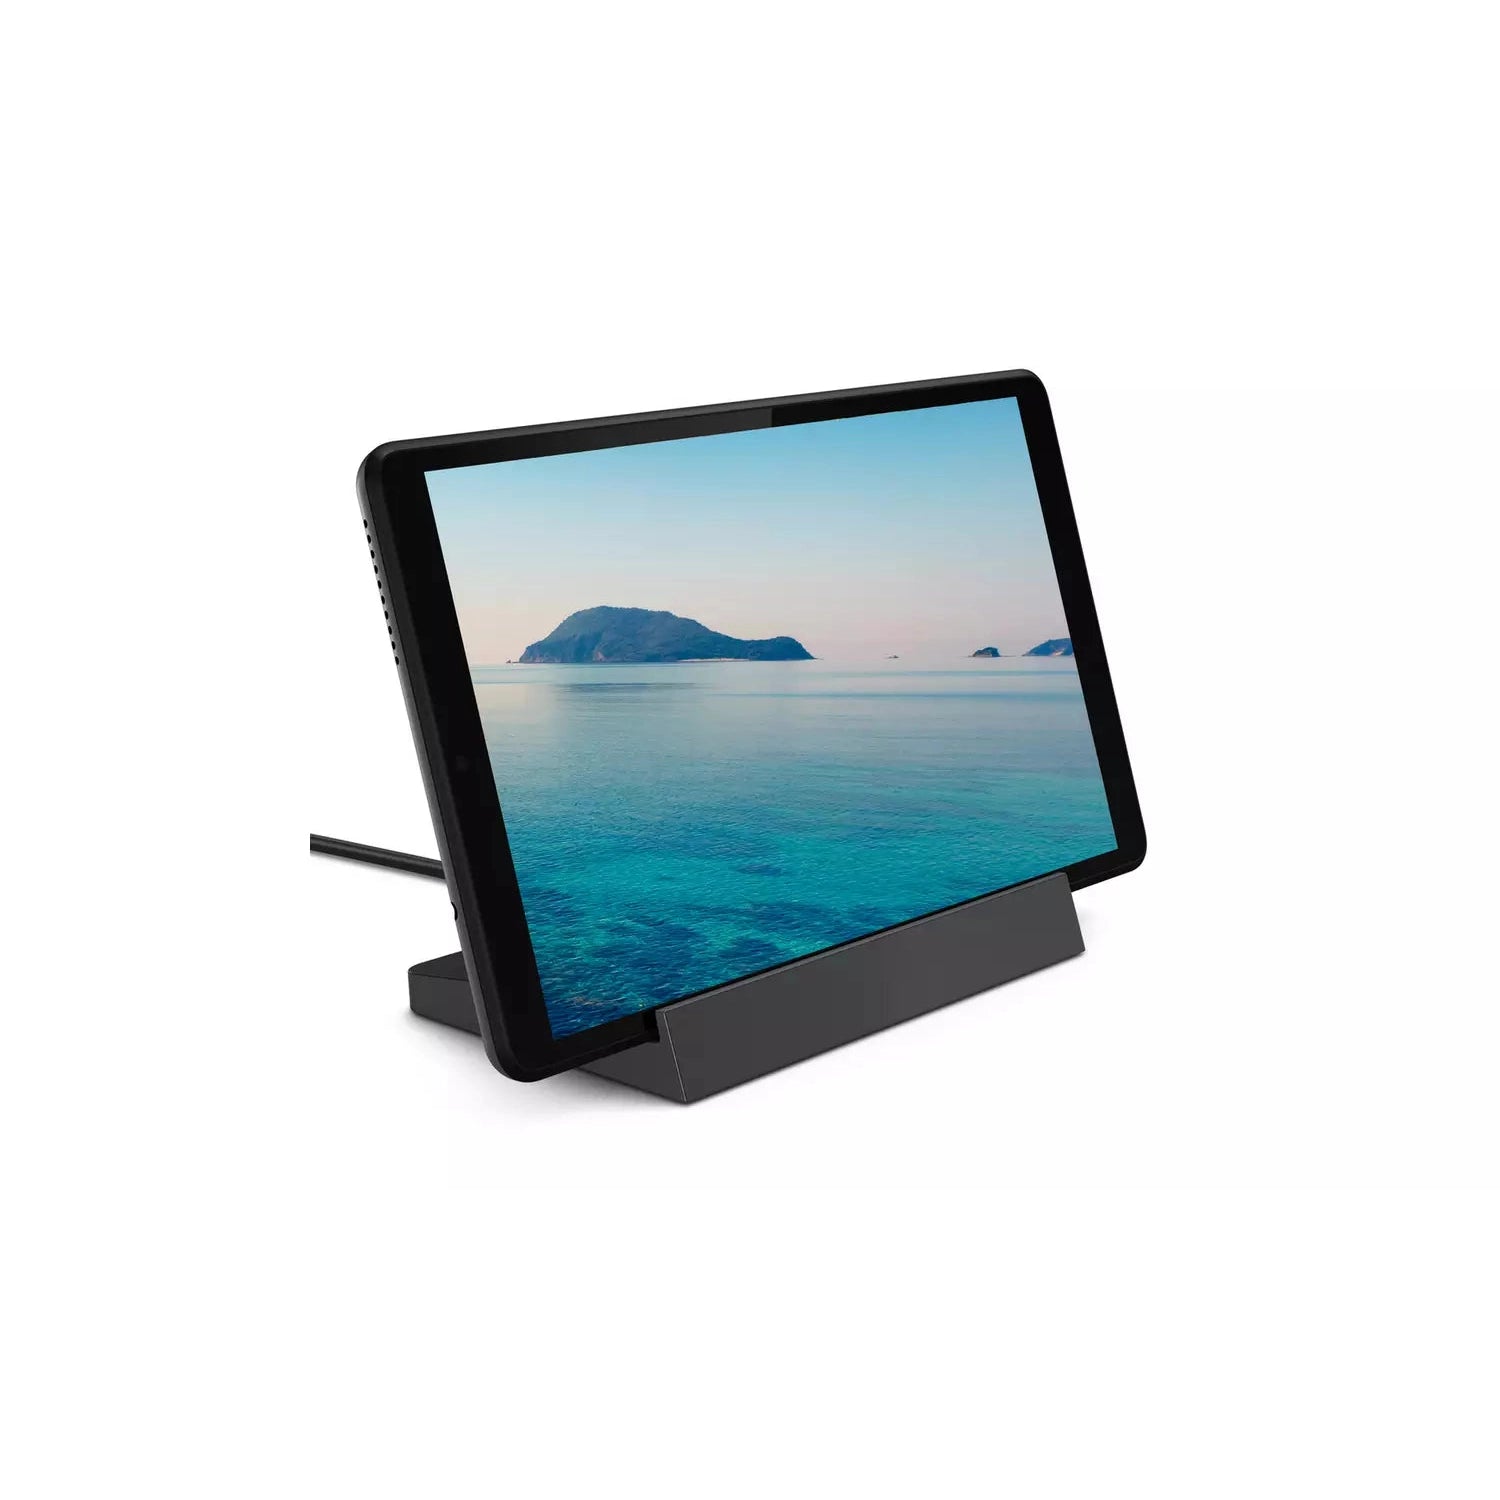 Lenovo M8 Smart Tab 8", 32GB Tablet - Grey (TB-8505XS) - Refurbished Good